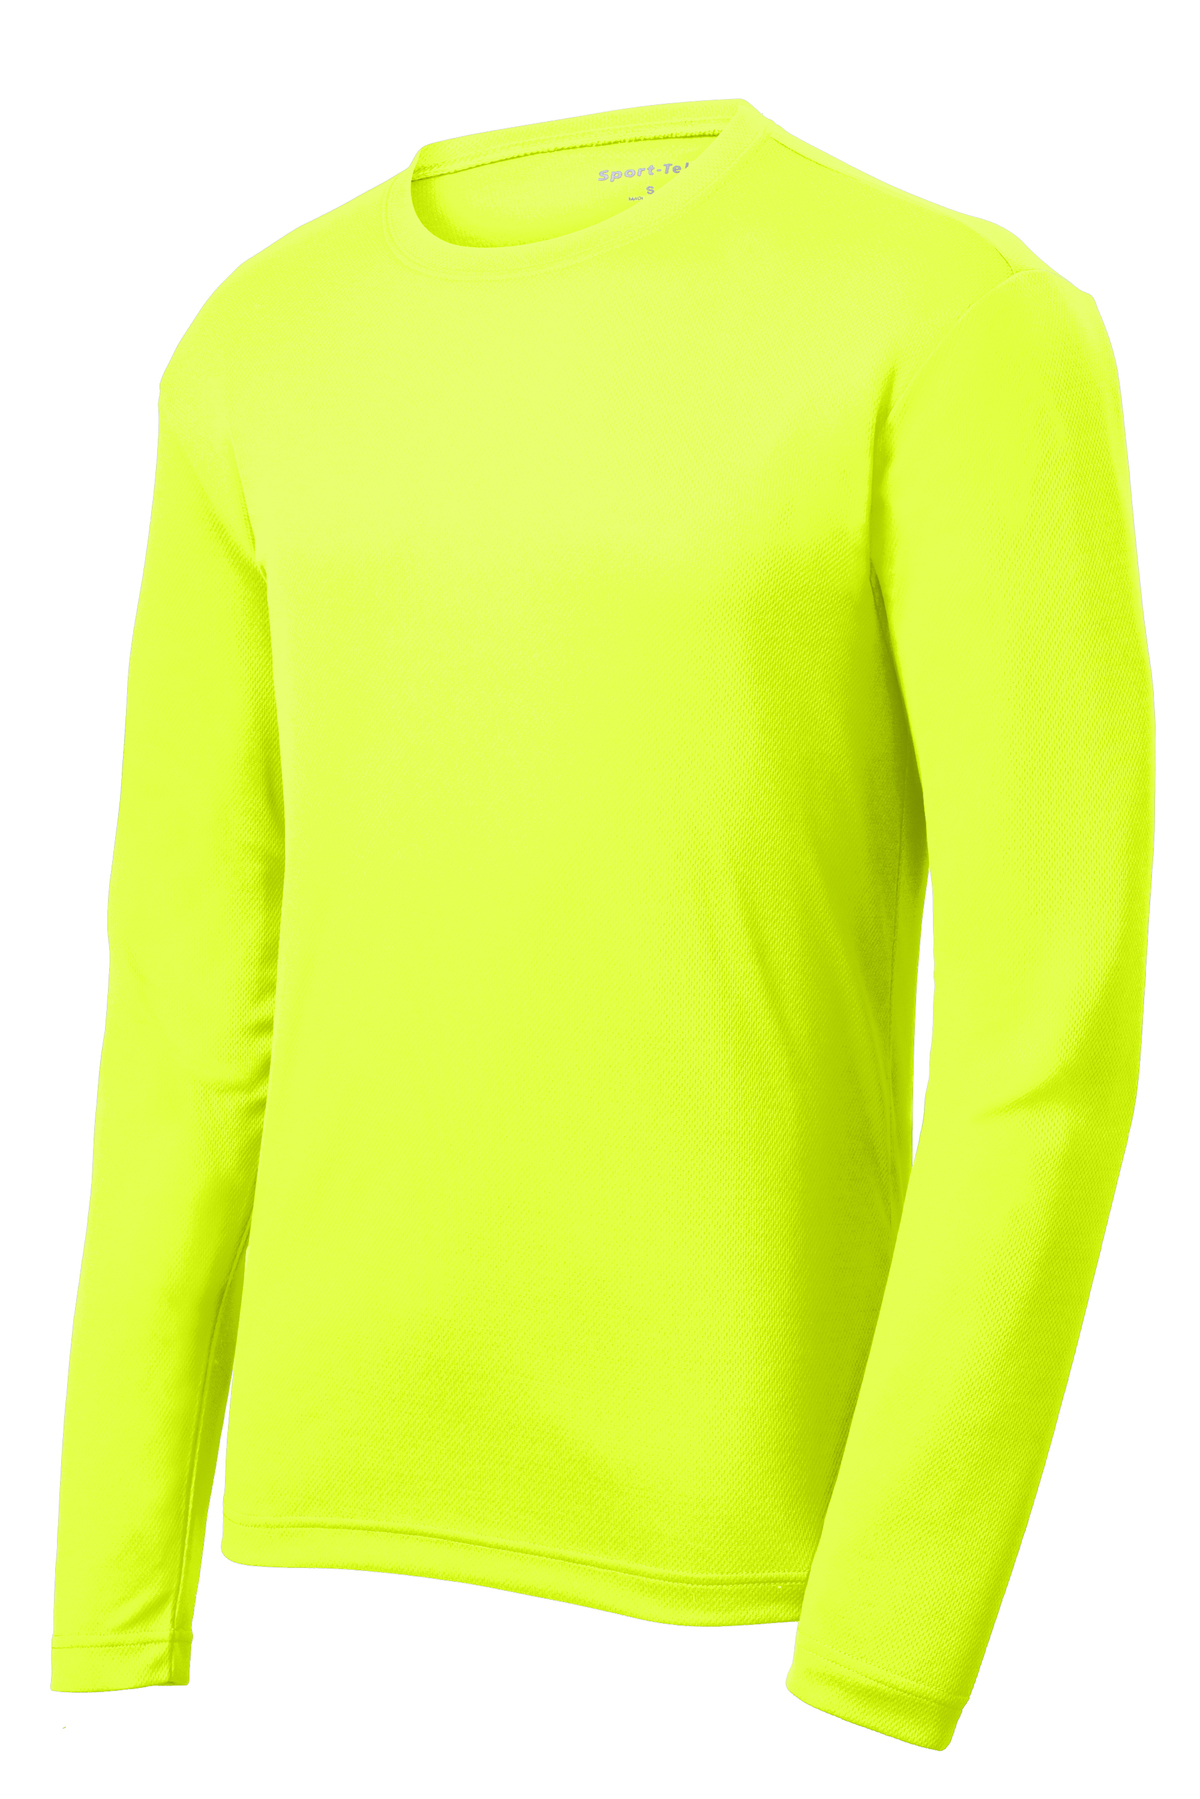 Ranelagh Harriers Men's Neon Yellow Sports T-Shirt - iPROSPORTS